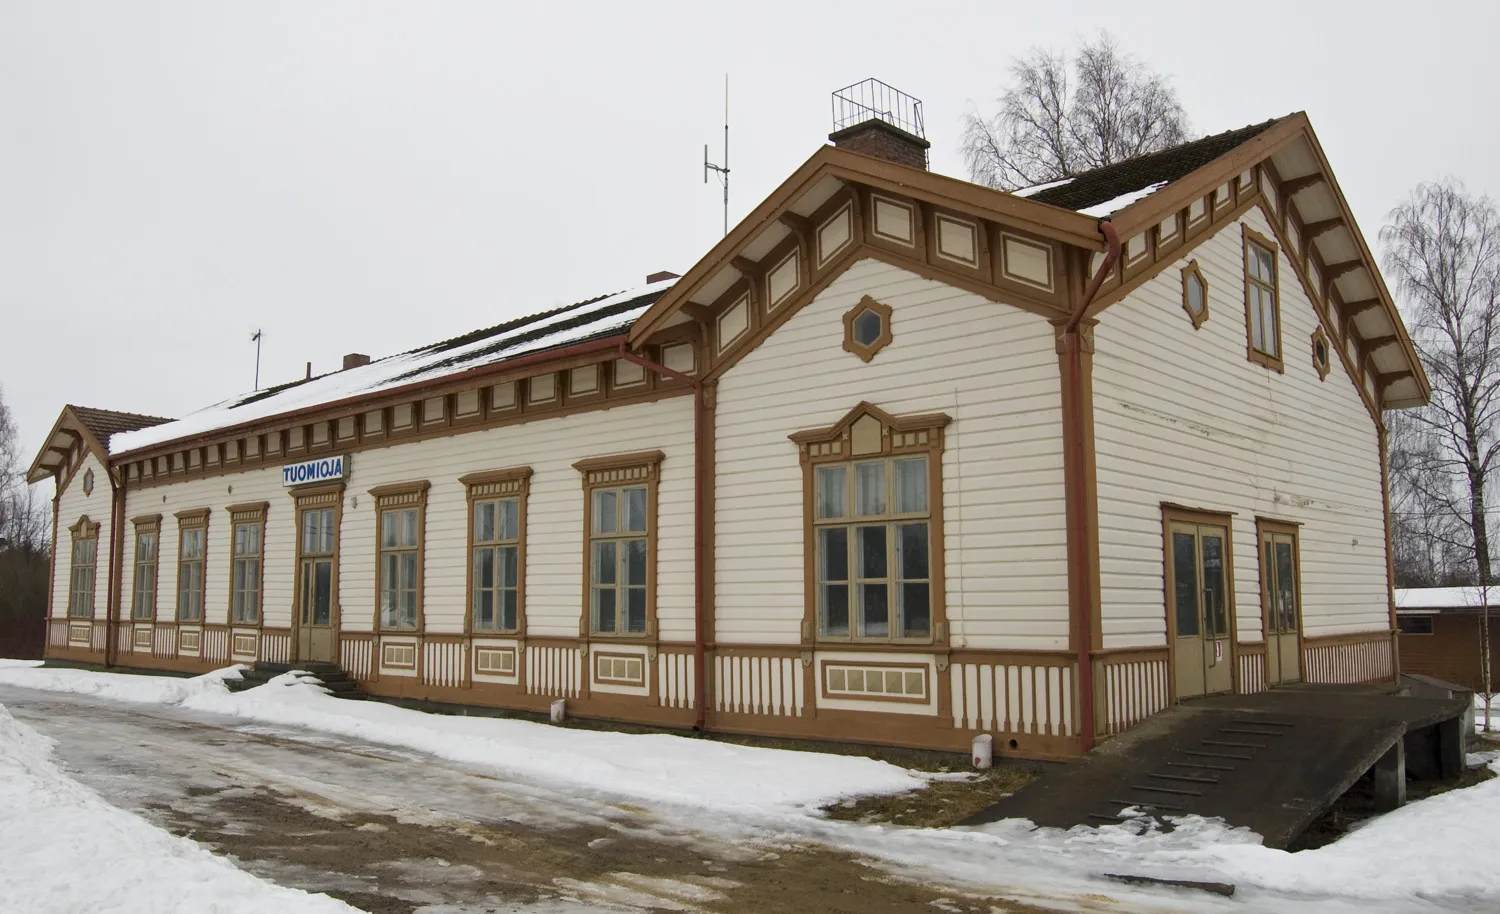 Photo showing: Tuomioja railway station, Siikajoki, Finland.